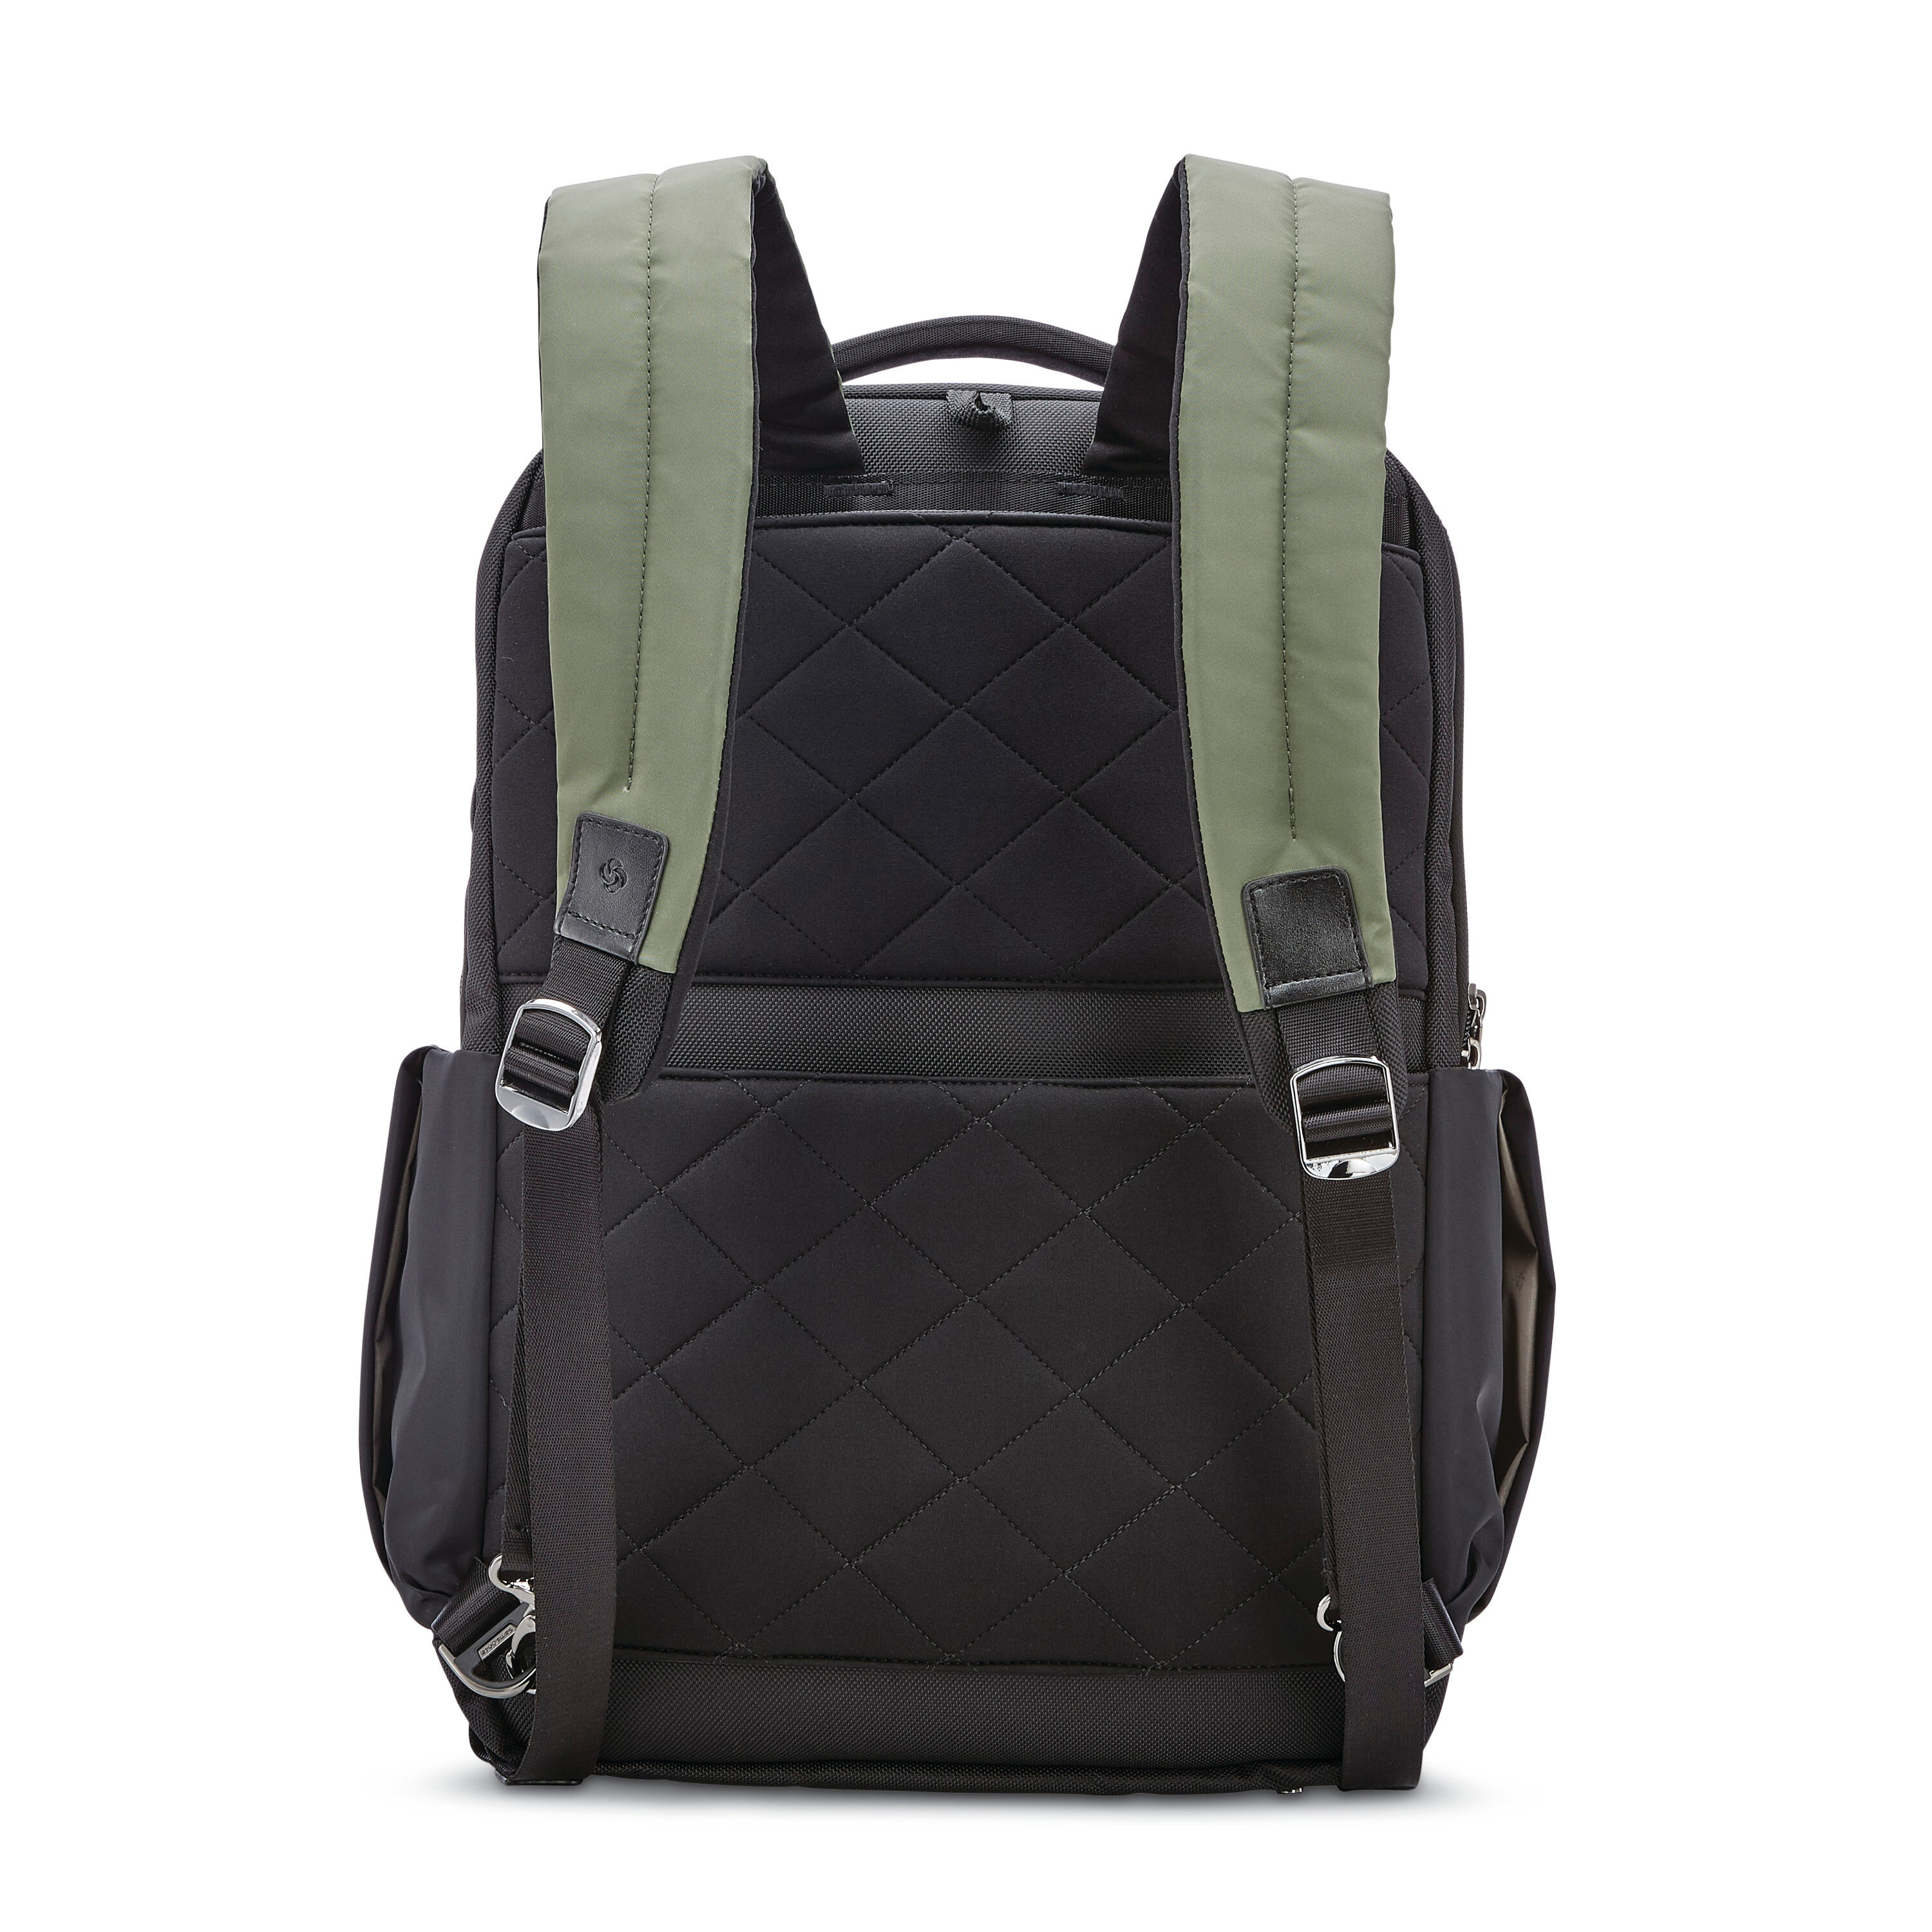 SAMSONITE Leather Backpack Black Purse | eBay